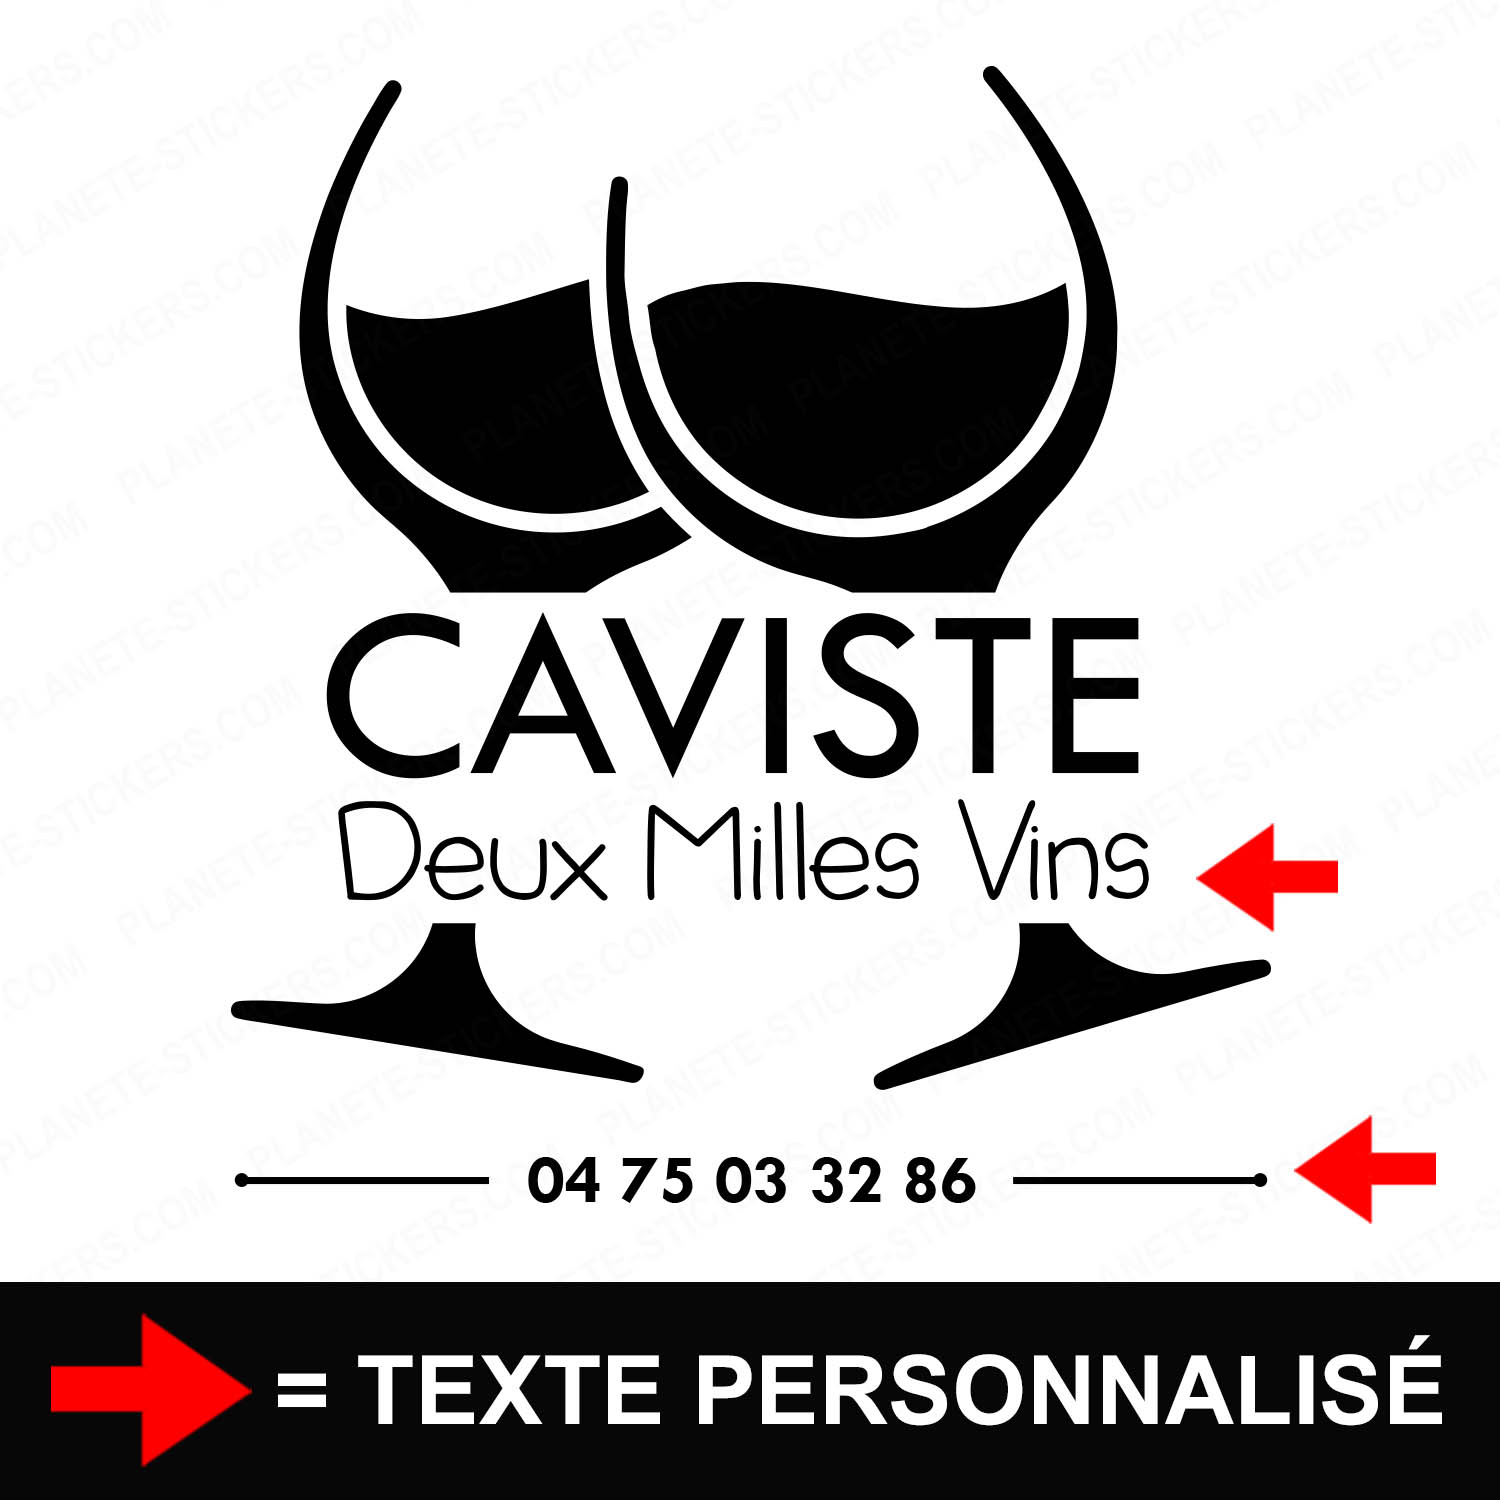 ref4cavistevitrine-stickers-caviste-vitrine-sticker-personnalisé-autocollant-vin-boutique-pro-degustation-verre-professionnel-2